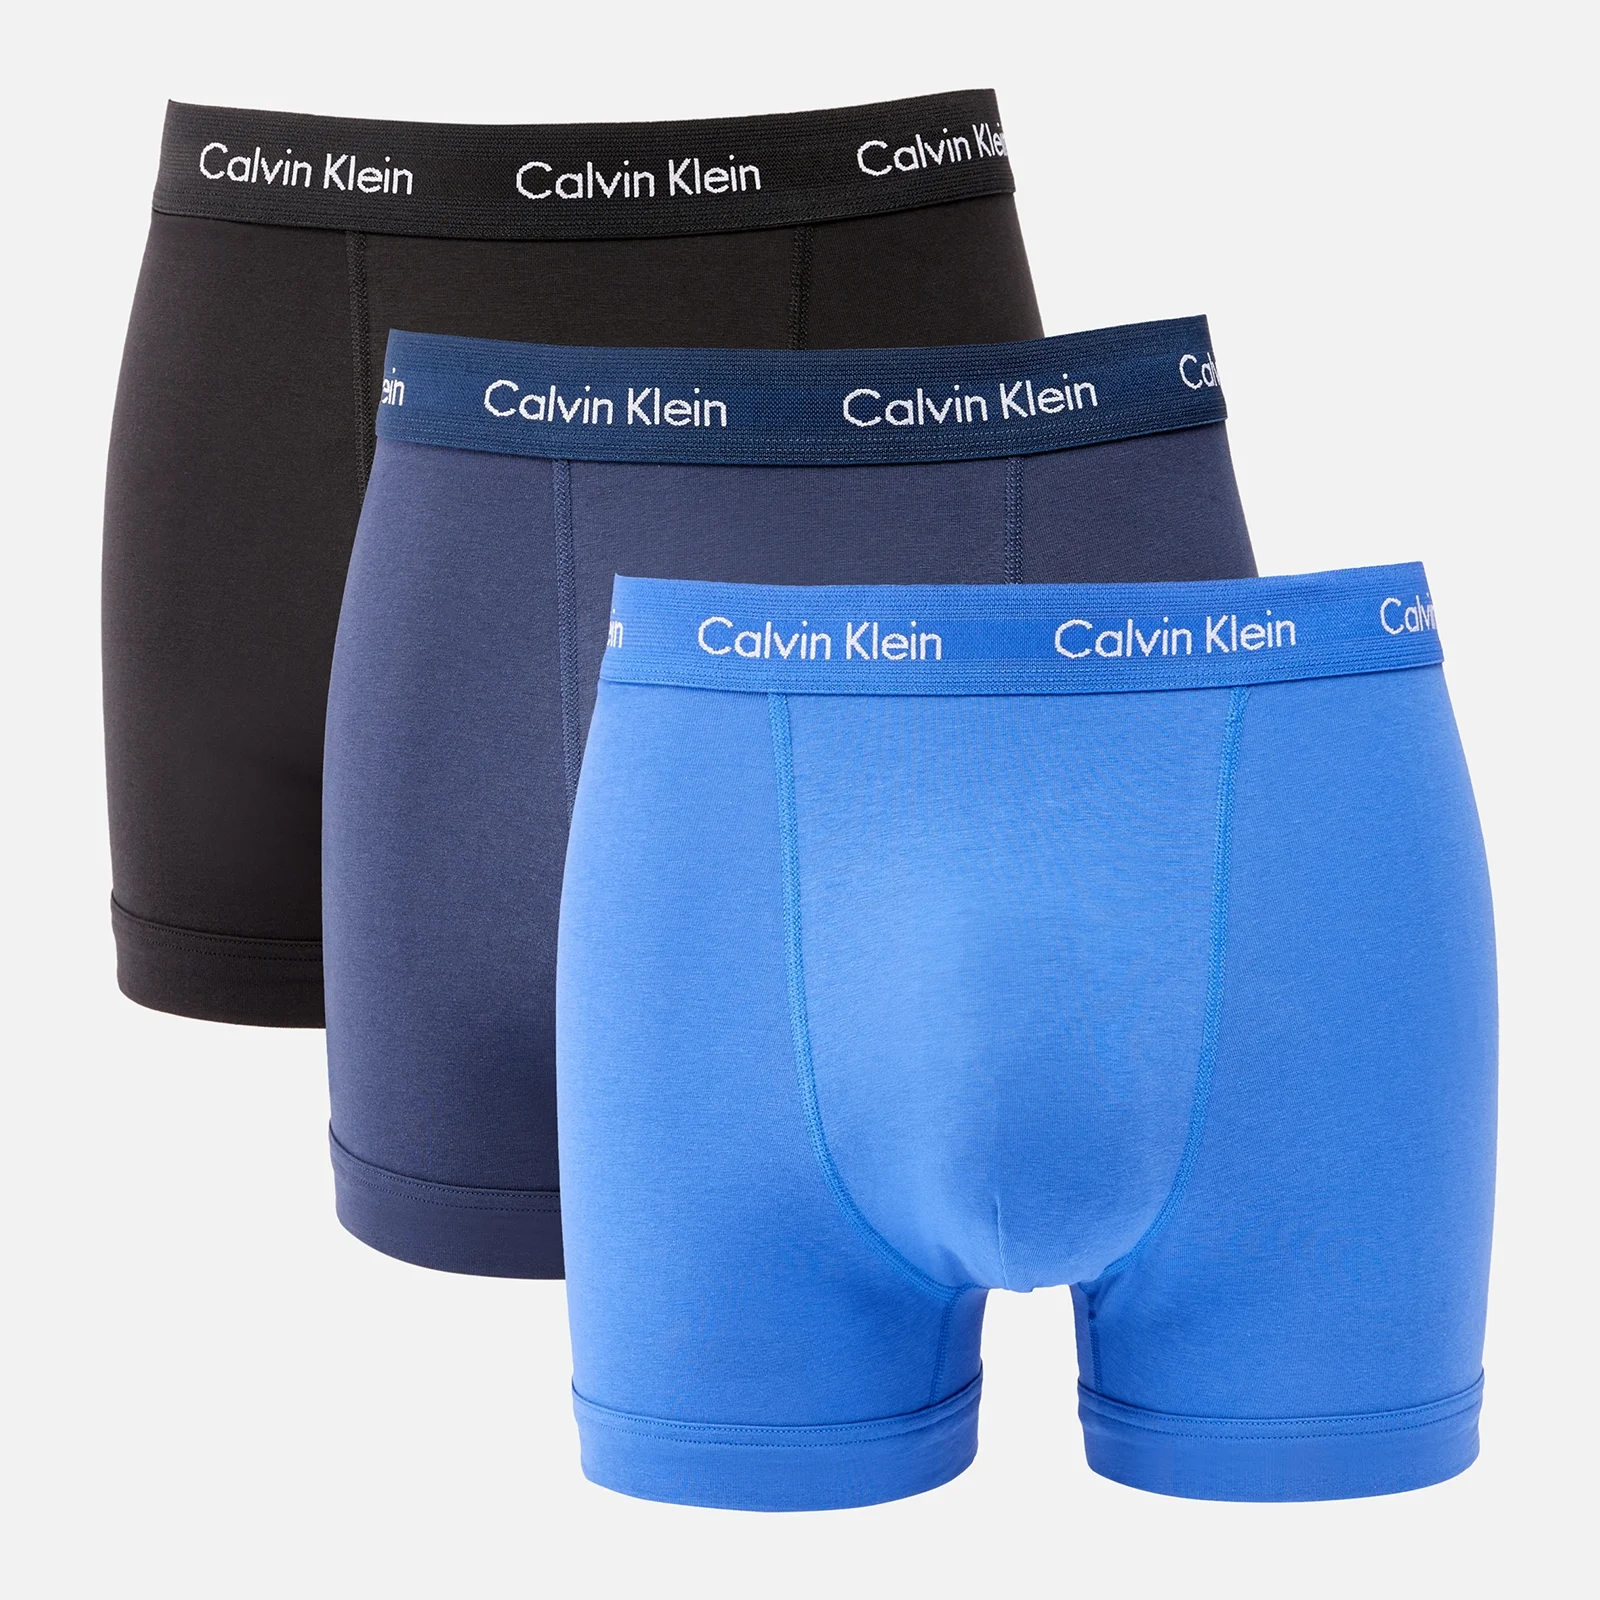 Calvin Klein Men's Cotton Stretch 3-Pack Trunks - Black/Blue/Blue - M Image 1